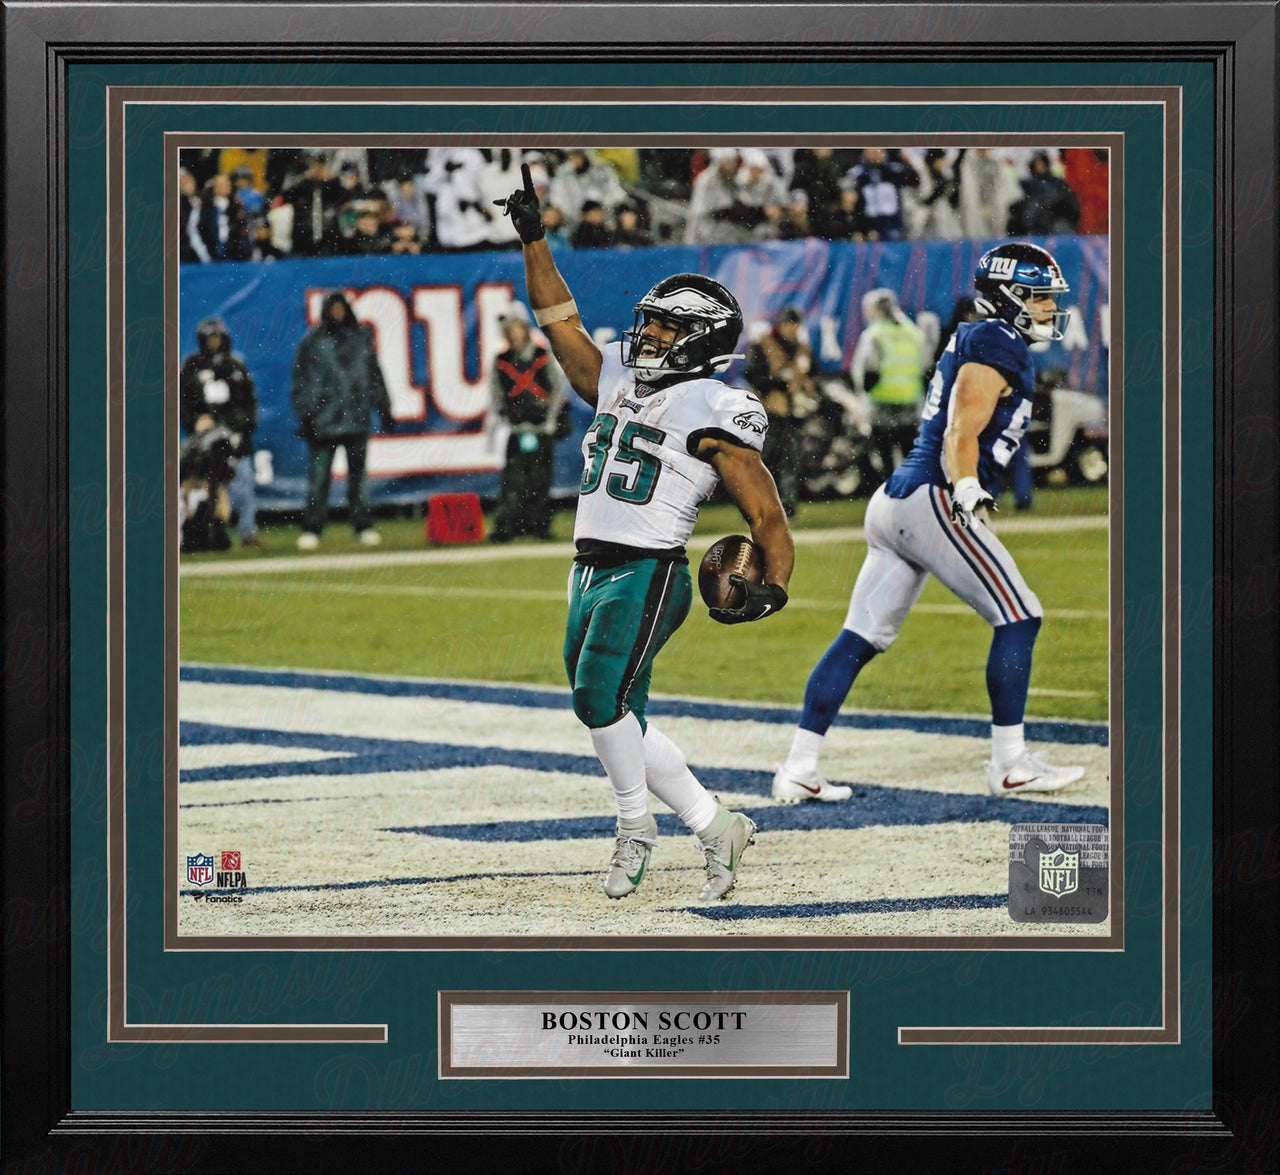 Boston Scott Touchdown Celebration v. Giants Philadelphia Eagles 11" x 14" Framed Football Photo